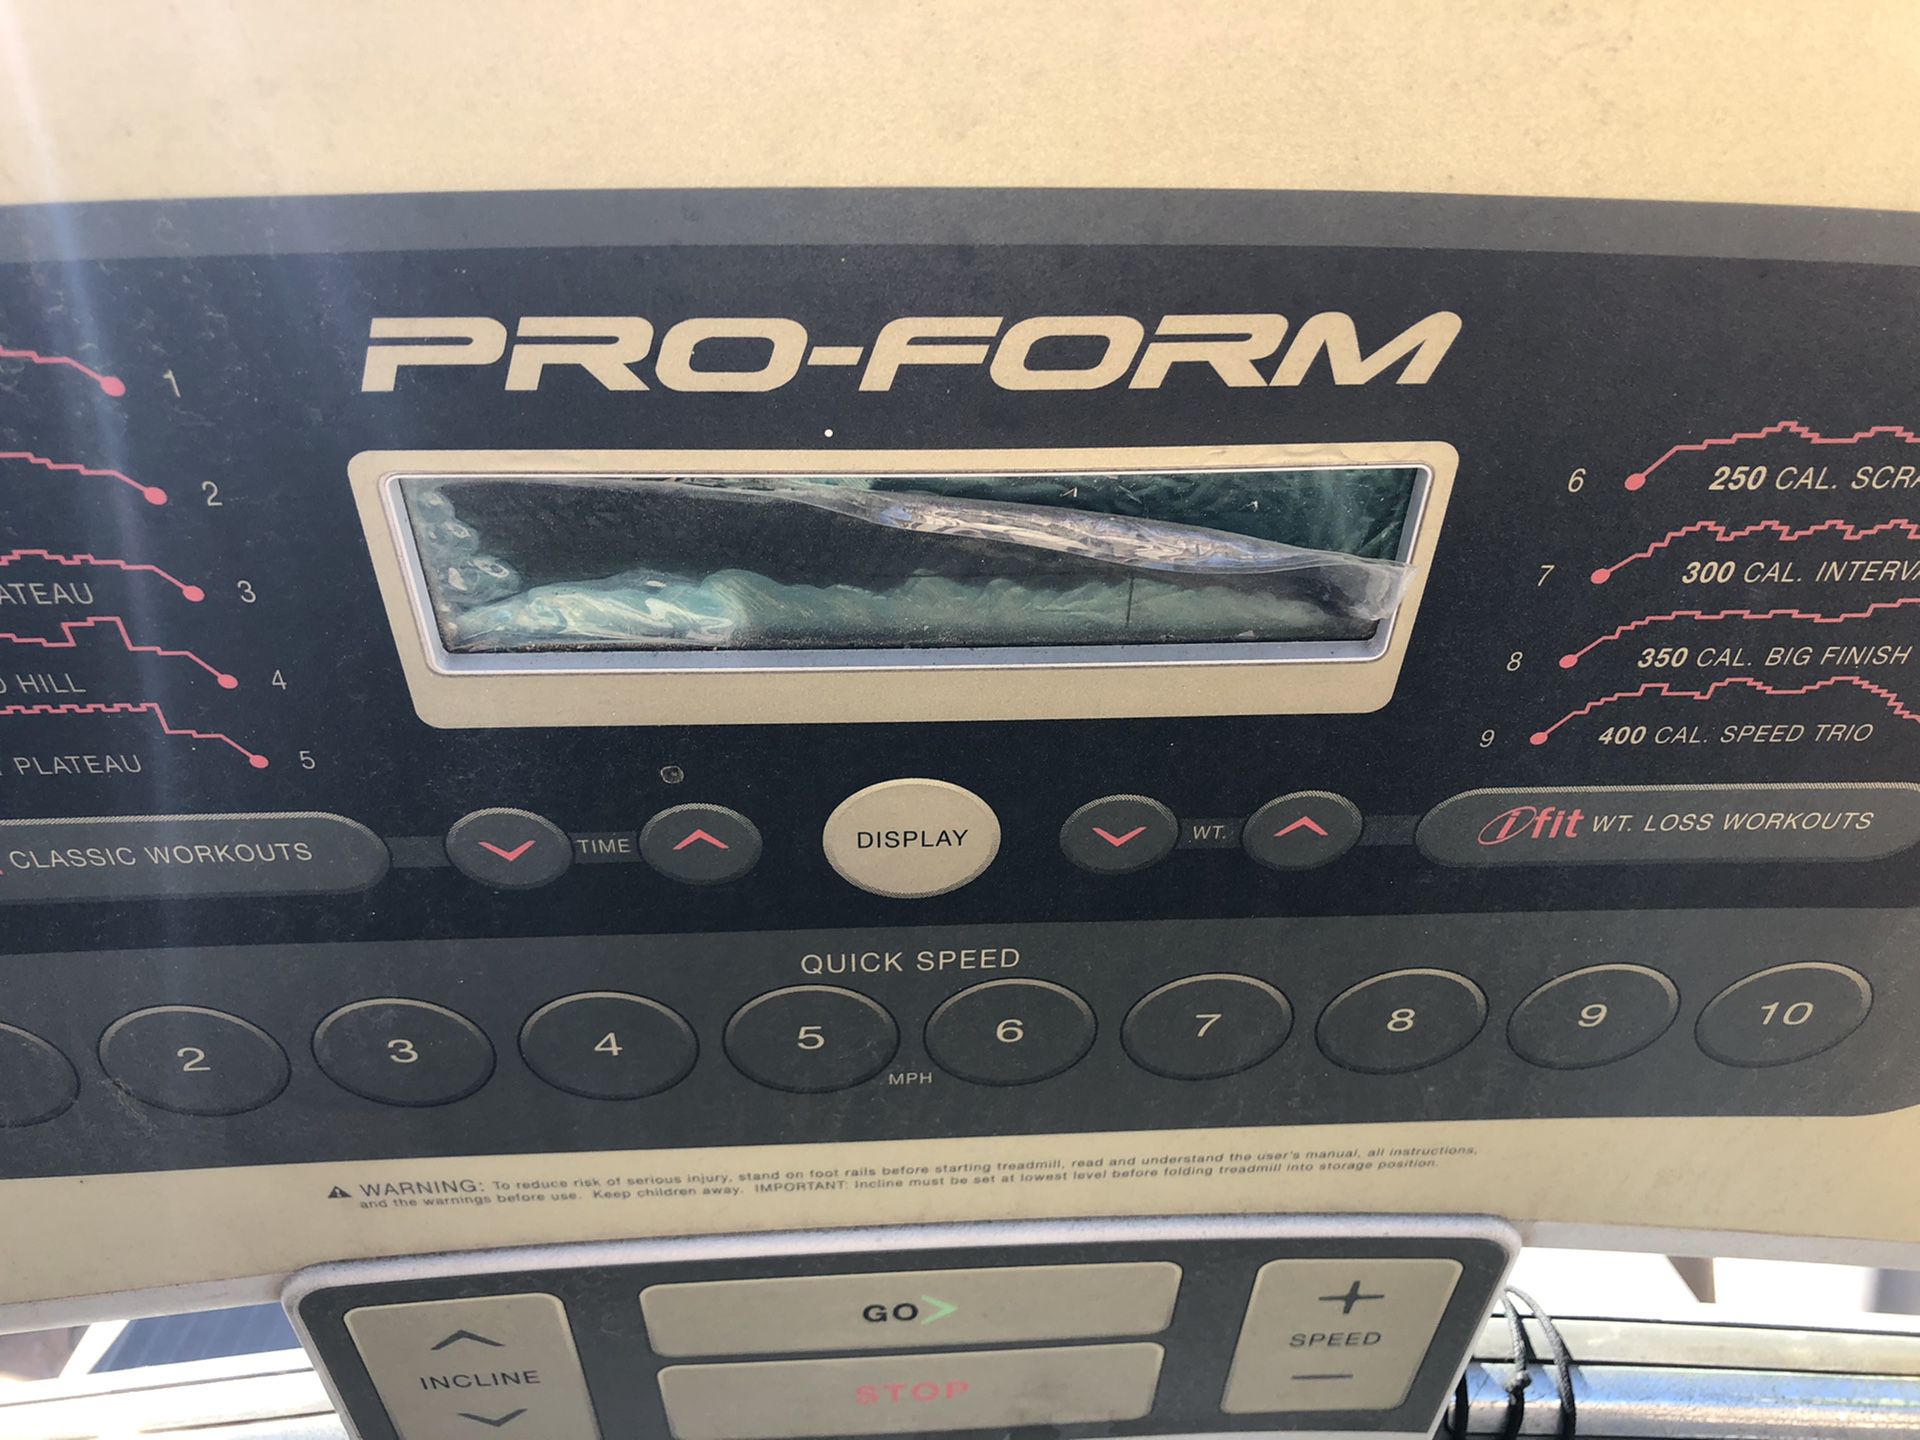 Cybez recumbent bike and Proform treadmill